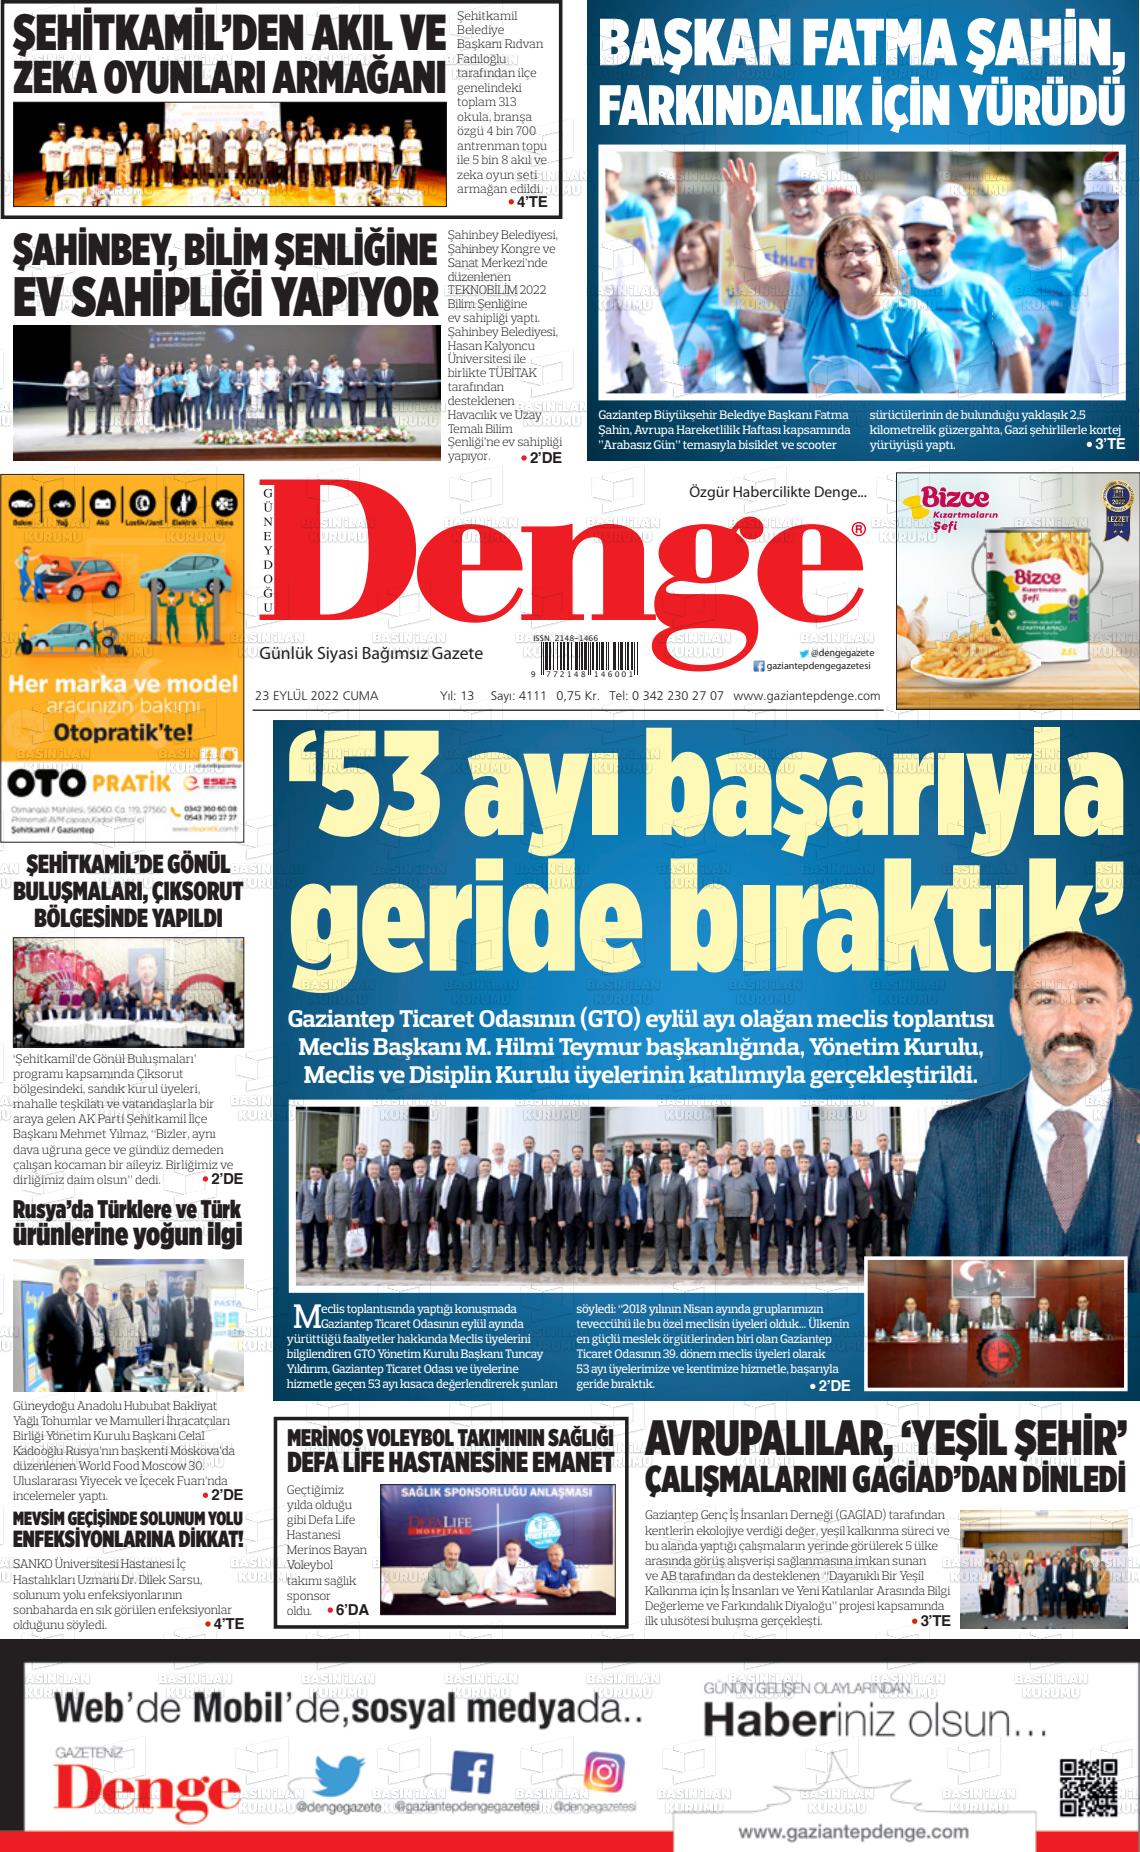 23 Eylül 2022 Gaziantep Denge Gazete Manşeti